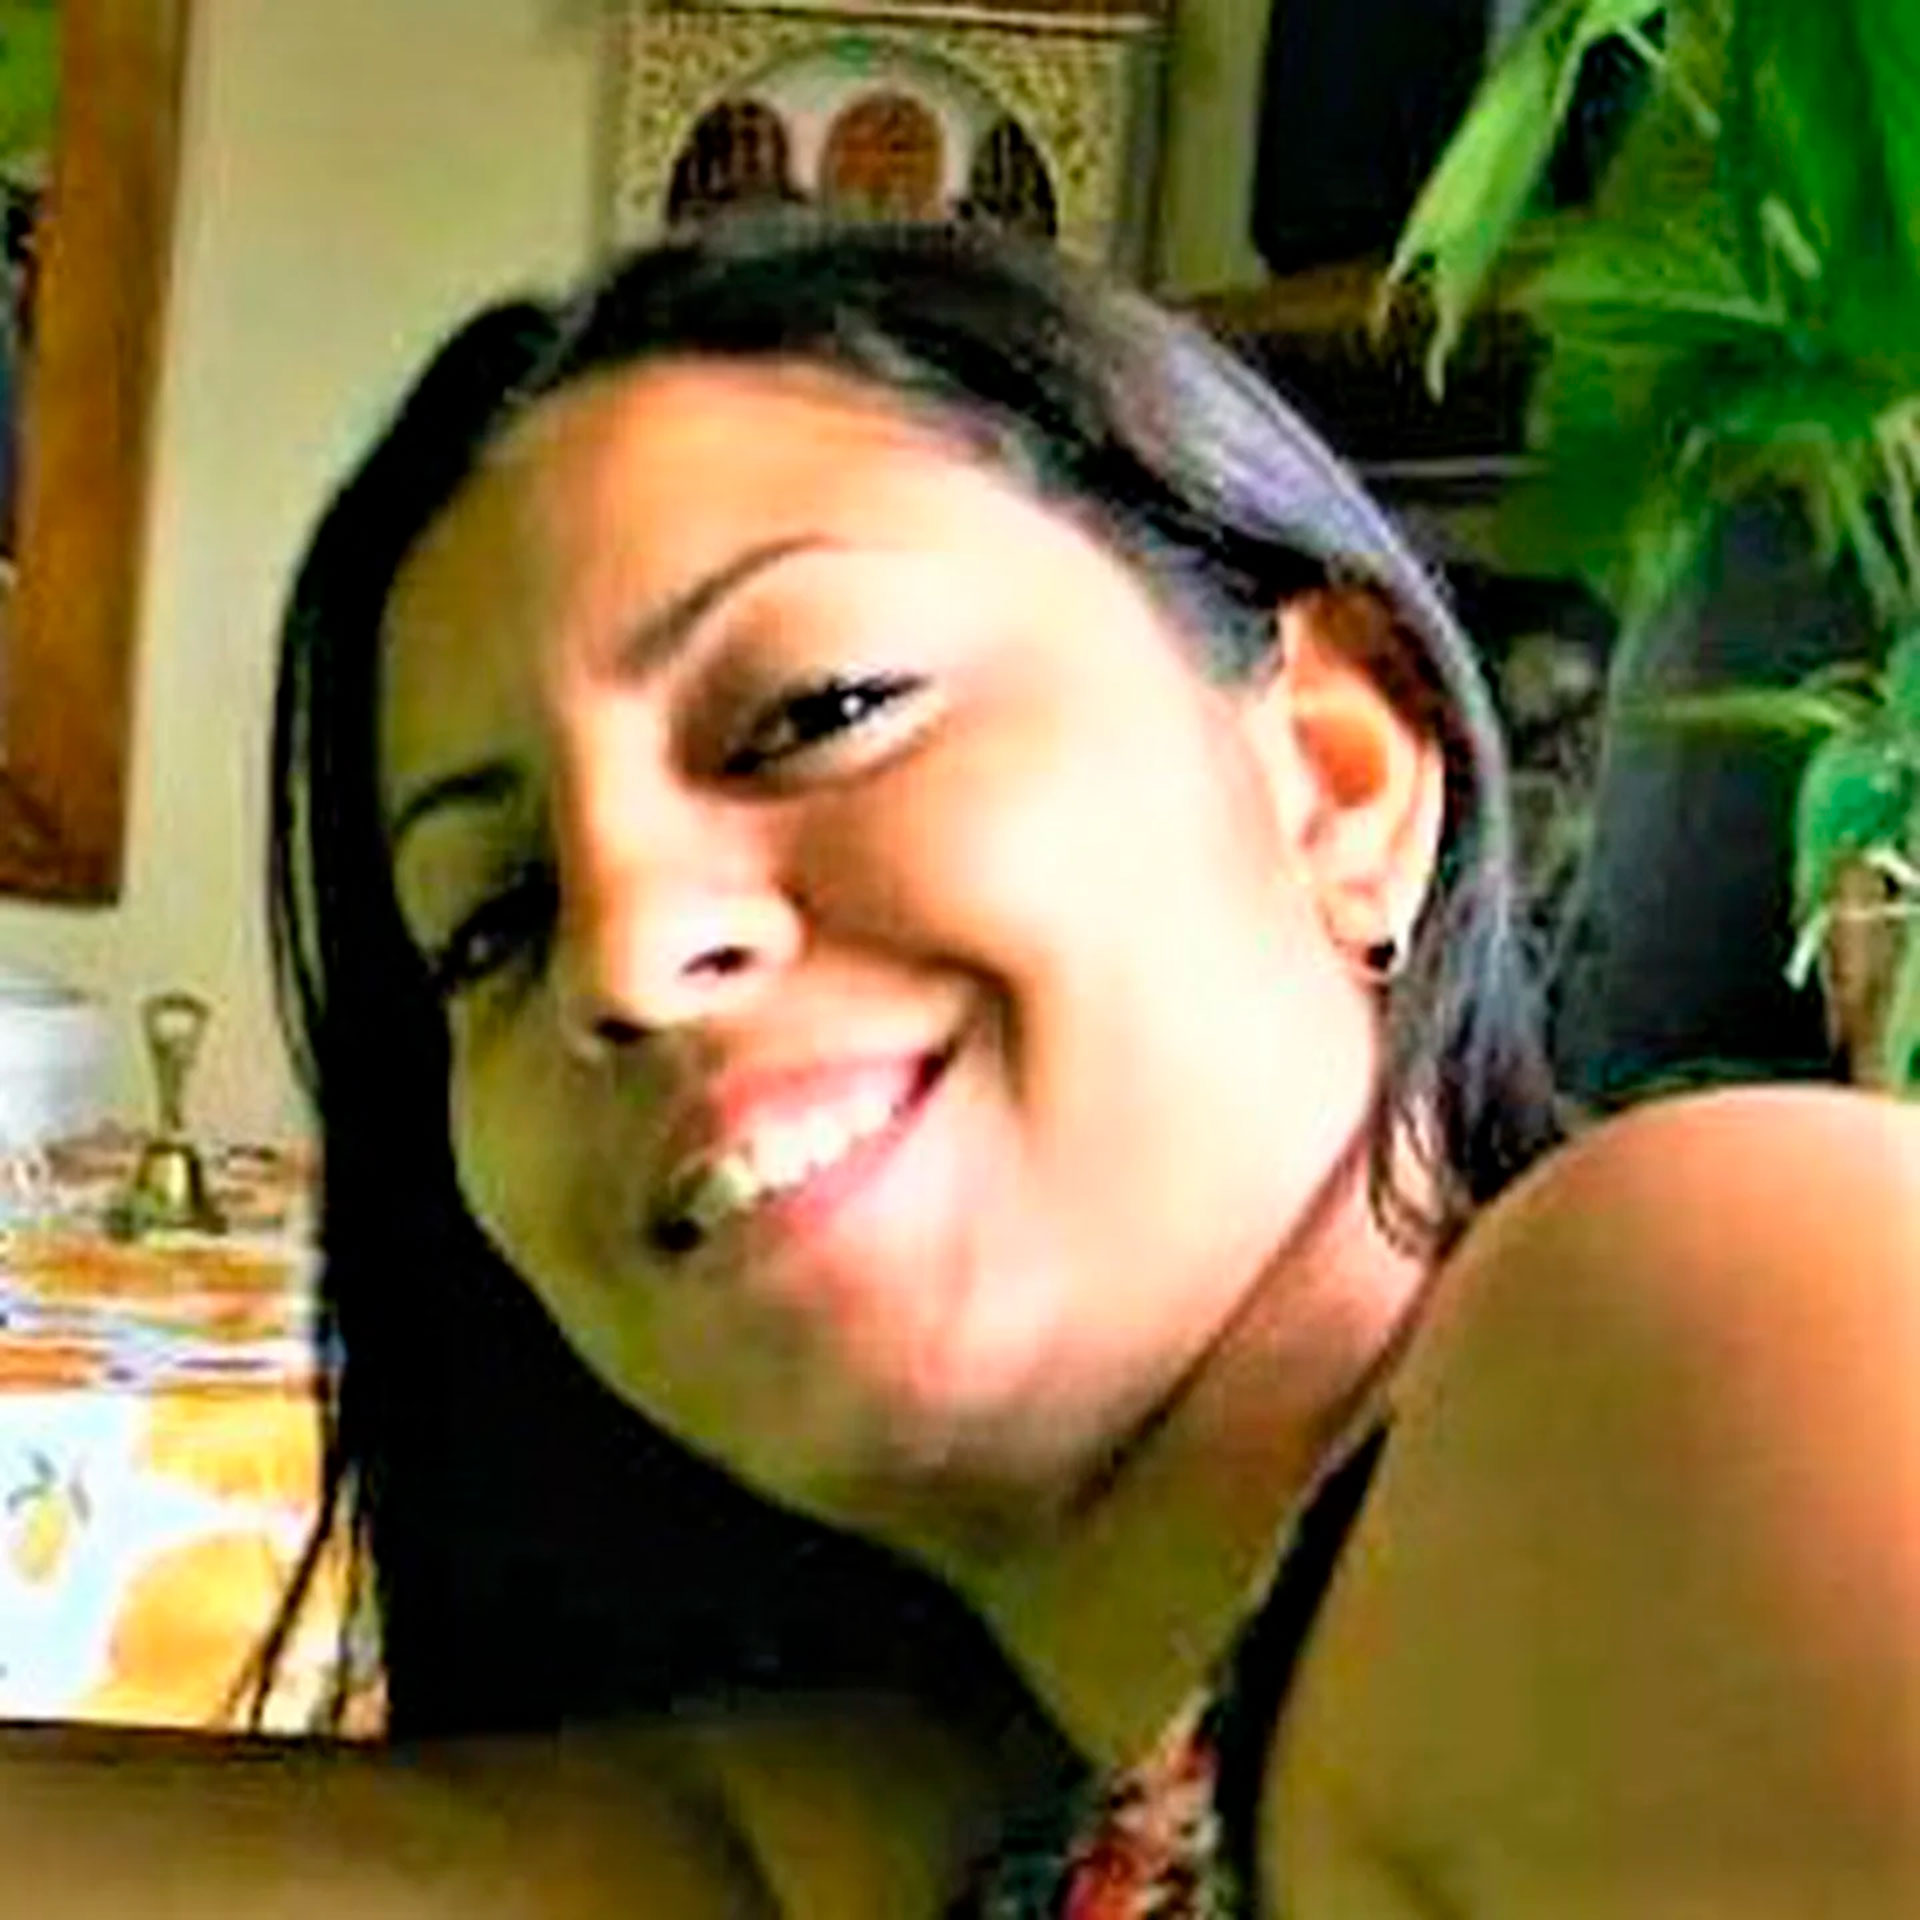 La azafata Jennifer Carolina Osuna Márquez trabajaba en el Palacio de Miraflores